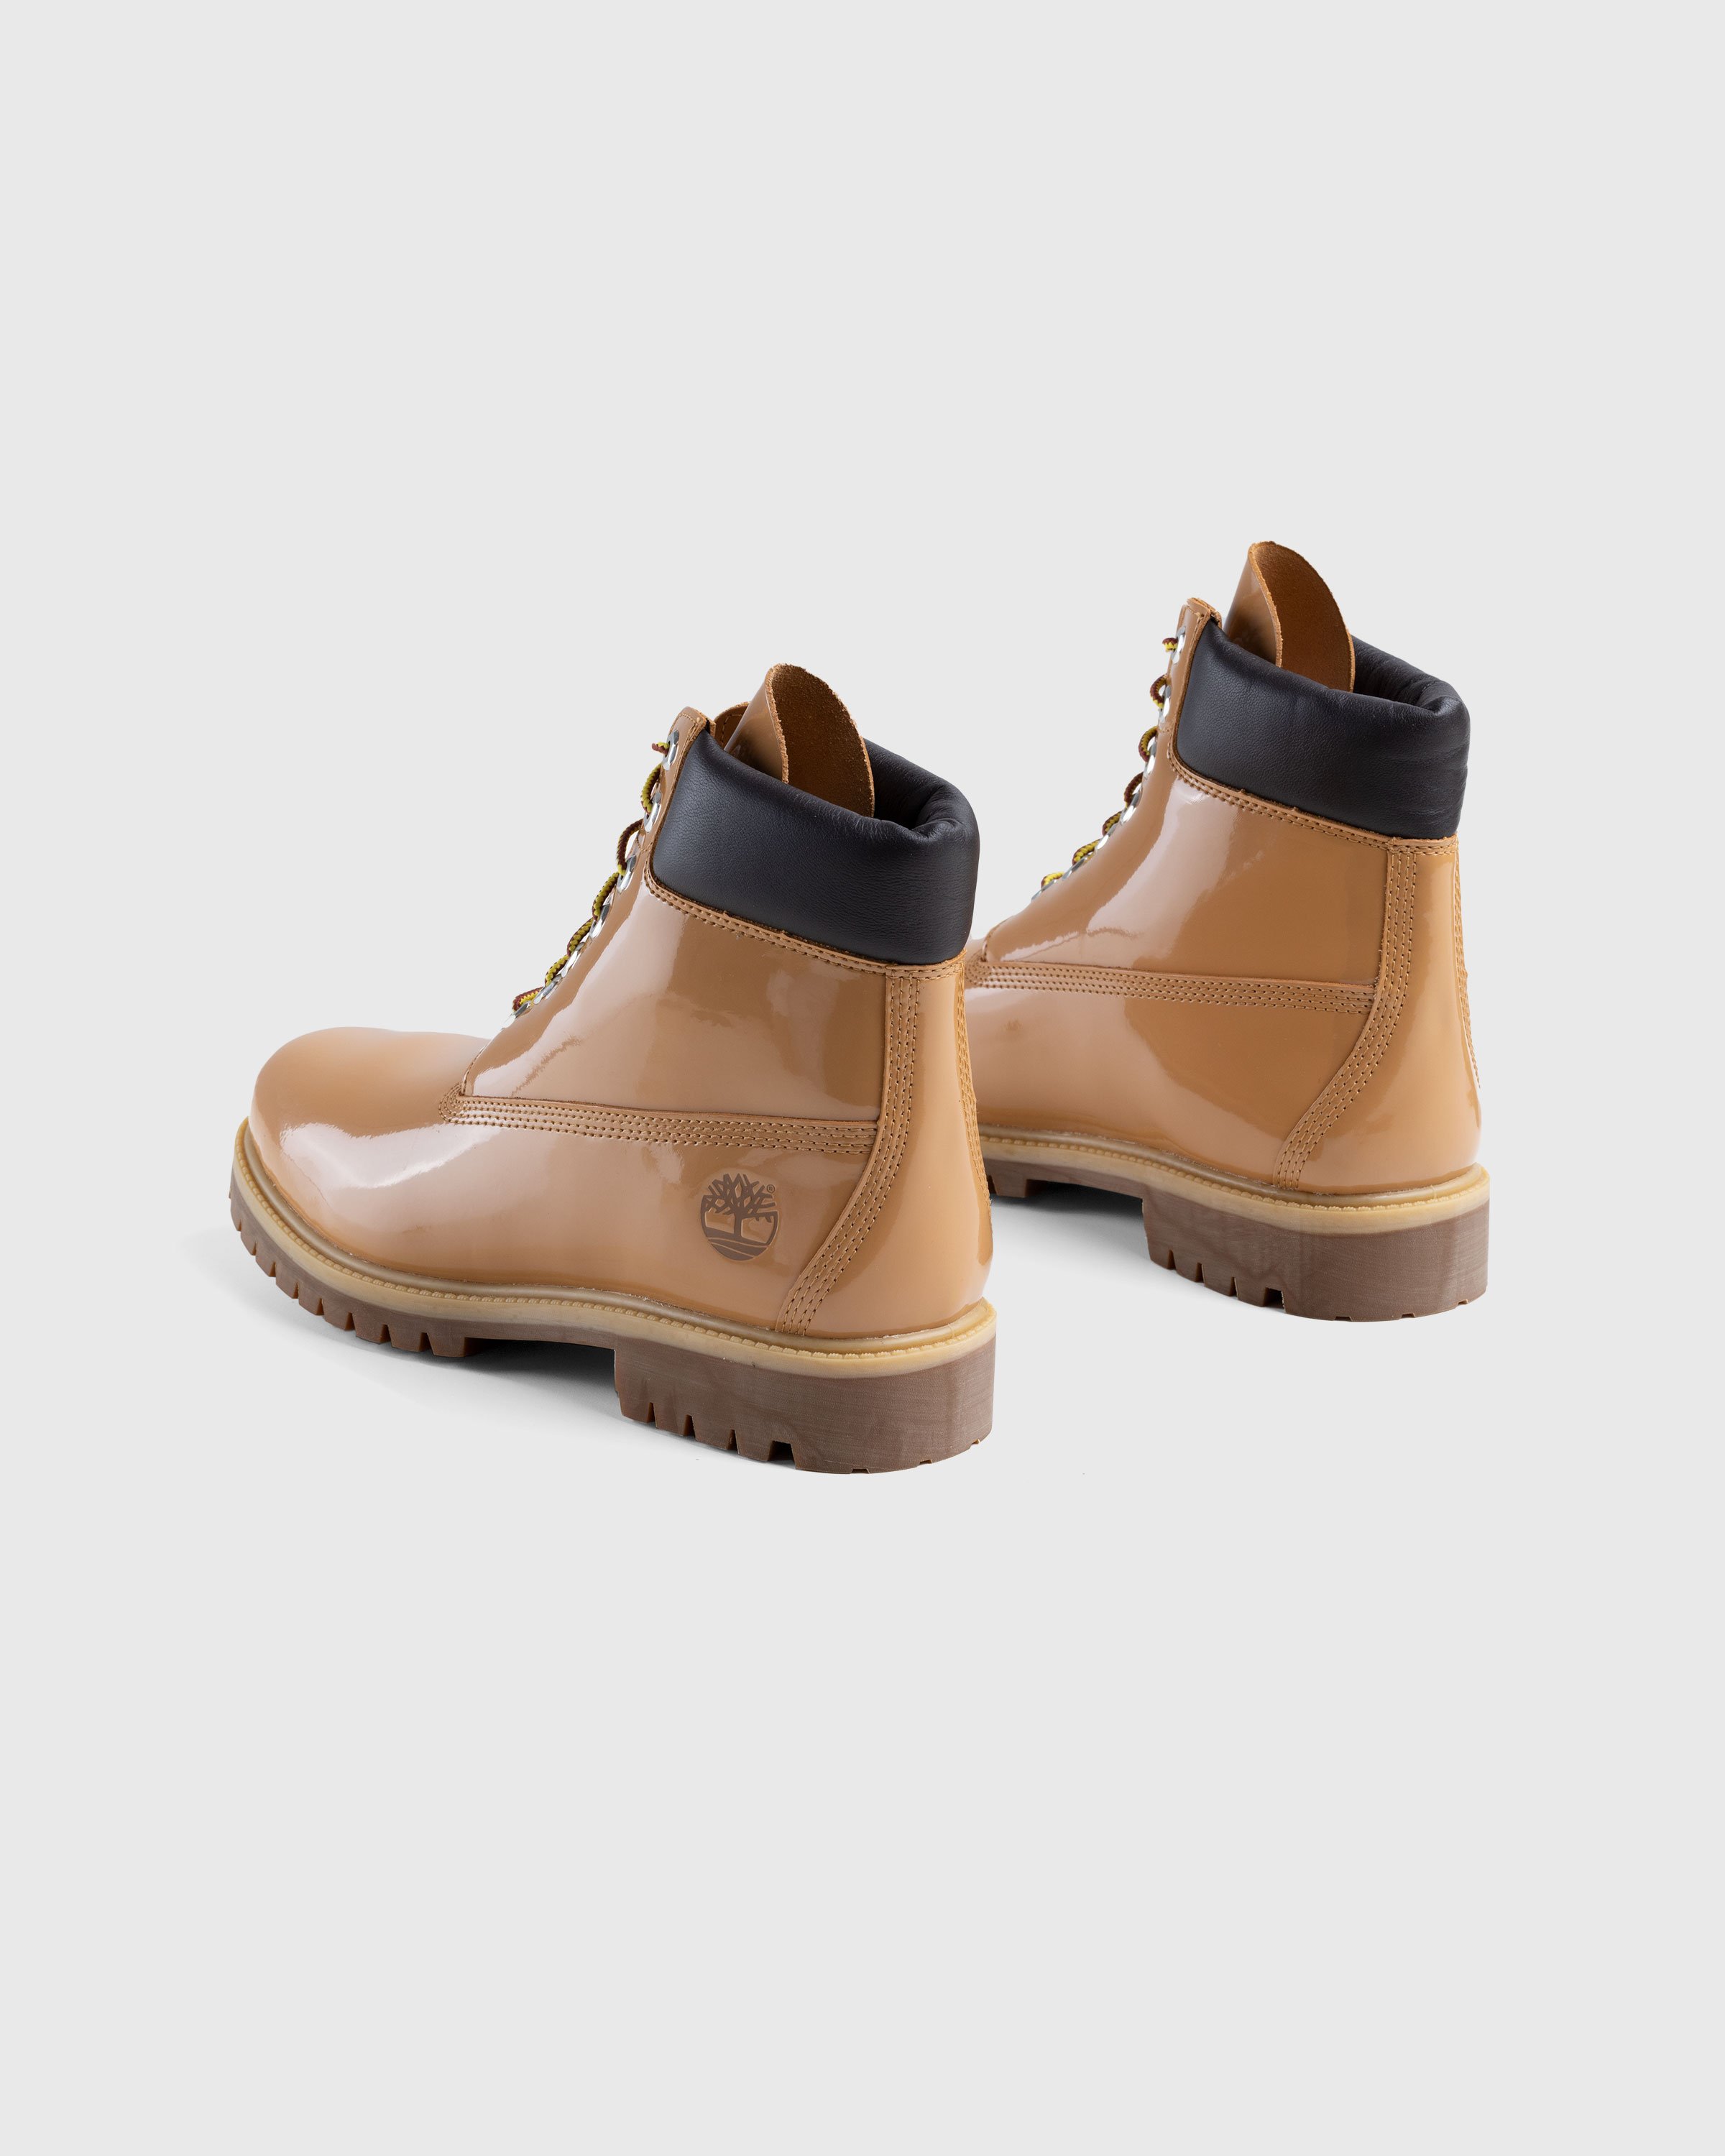 Veneda Carter x Timberland - 6" Patent Leather Boot - Footwear - Brown - Image 4